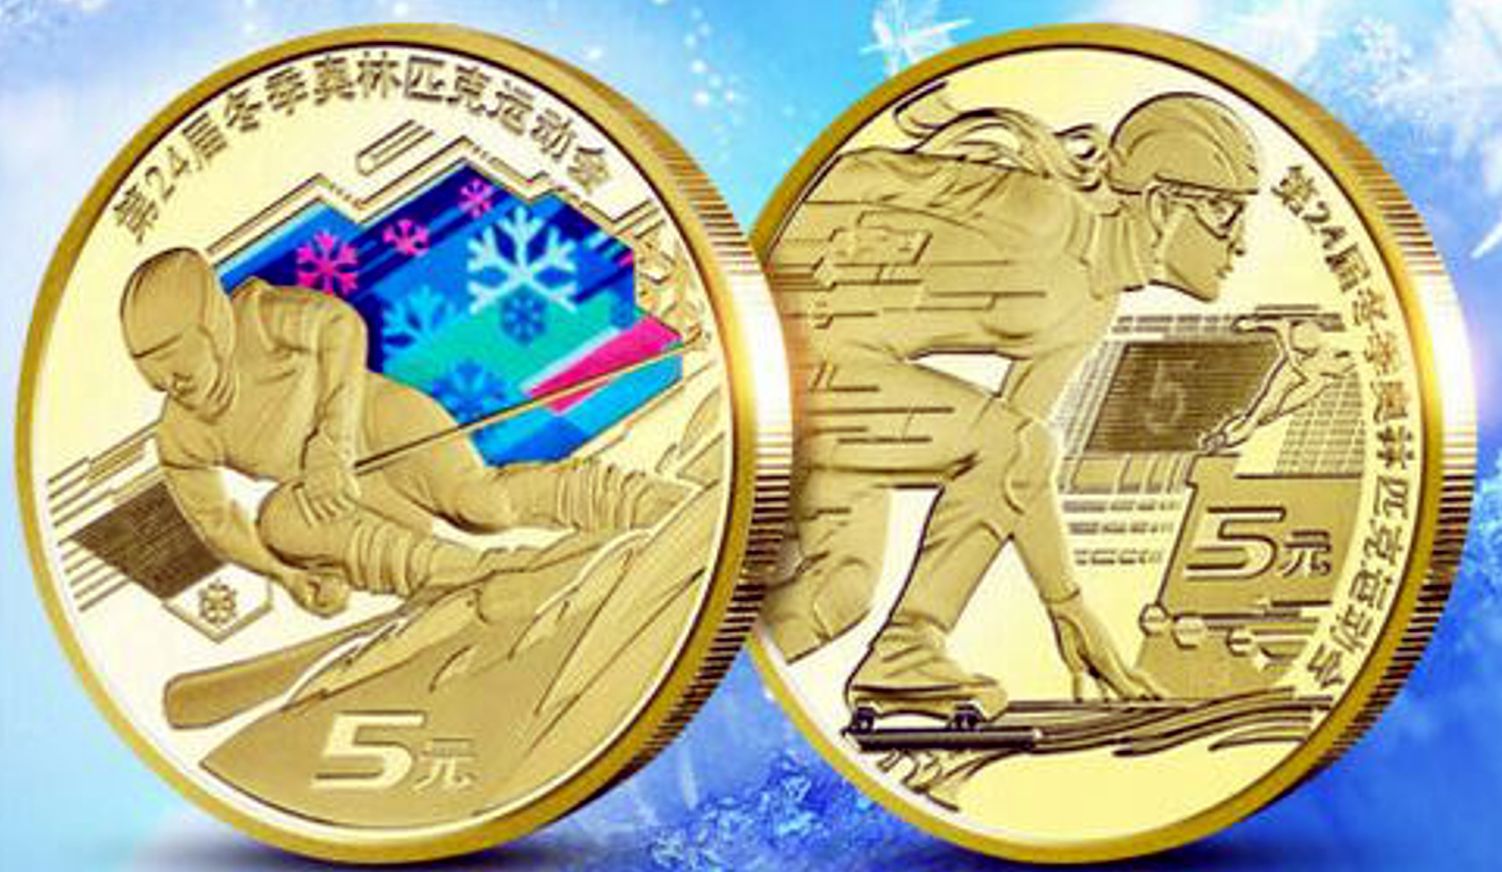 Sondermünzen zur Winteroly. Peking 2022, "Beijing 2022", vergoldet, Farbdruck